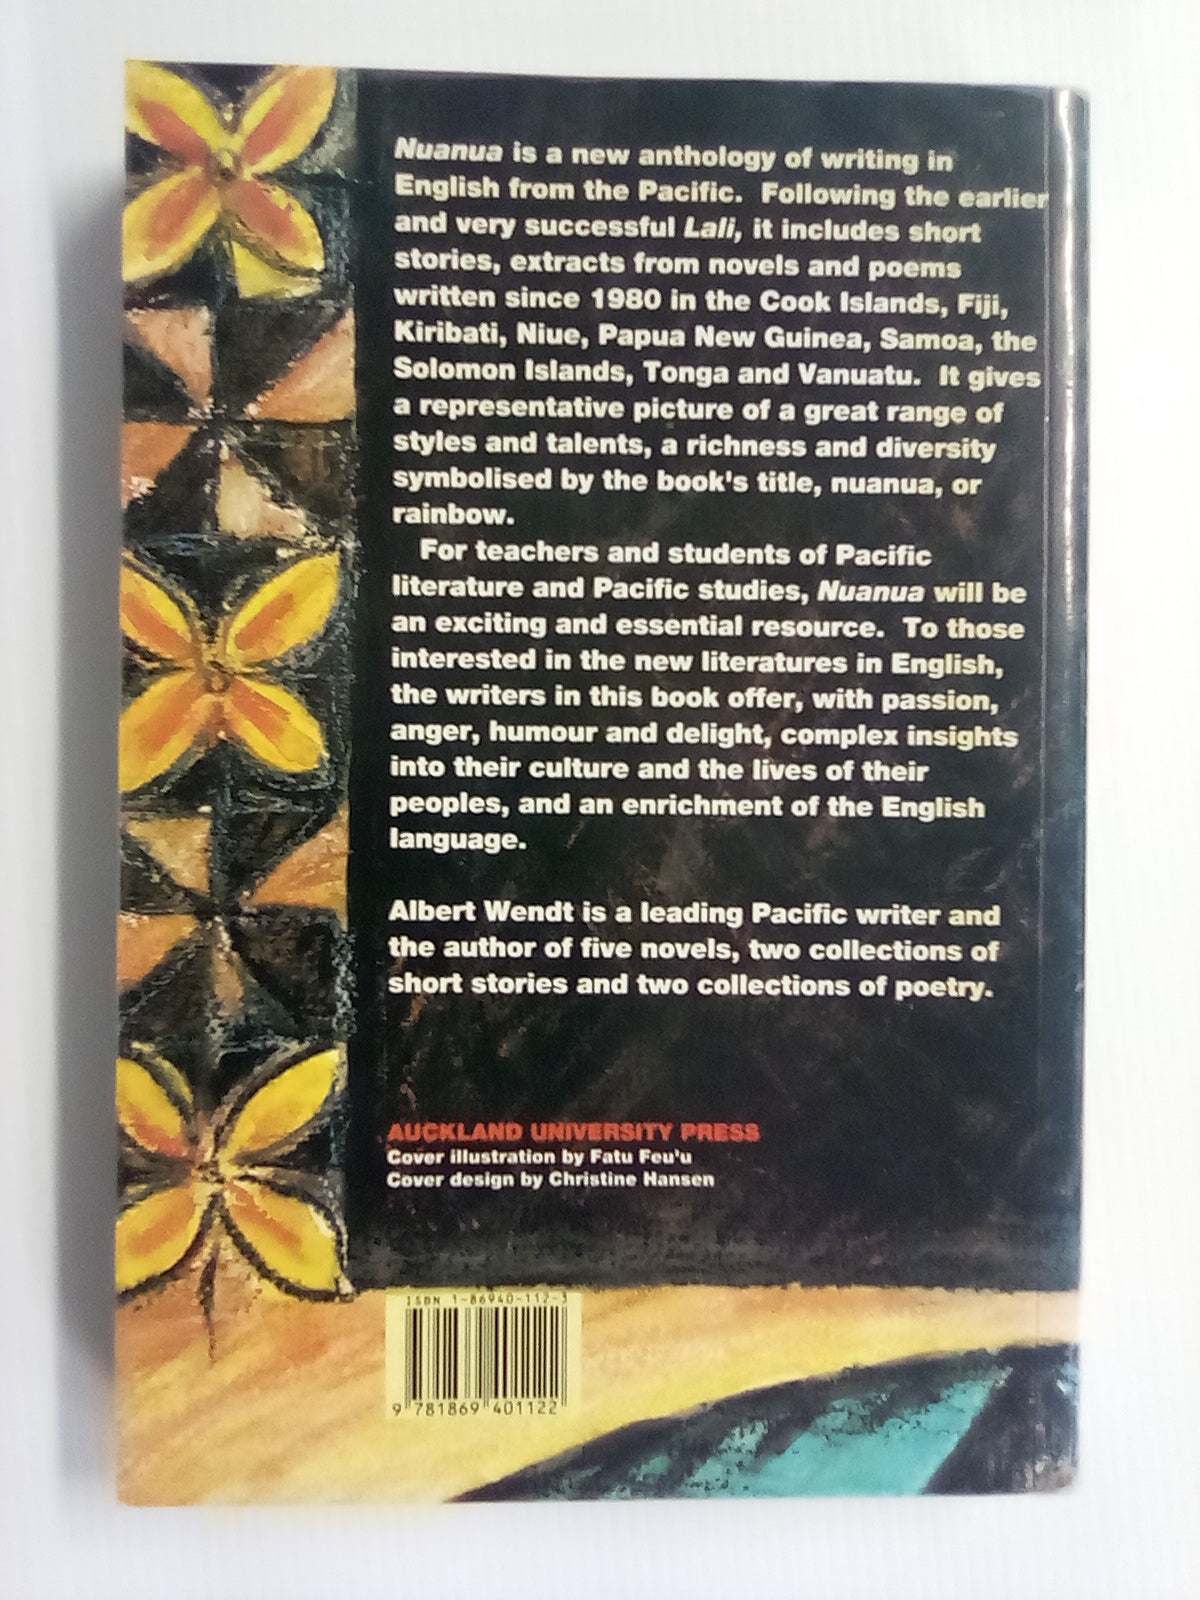 Nuanua - Pacific Writing in English since 1980 (Akld University Press)